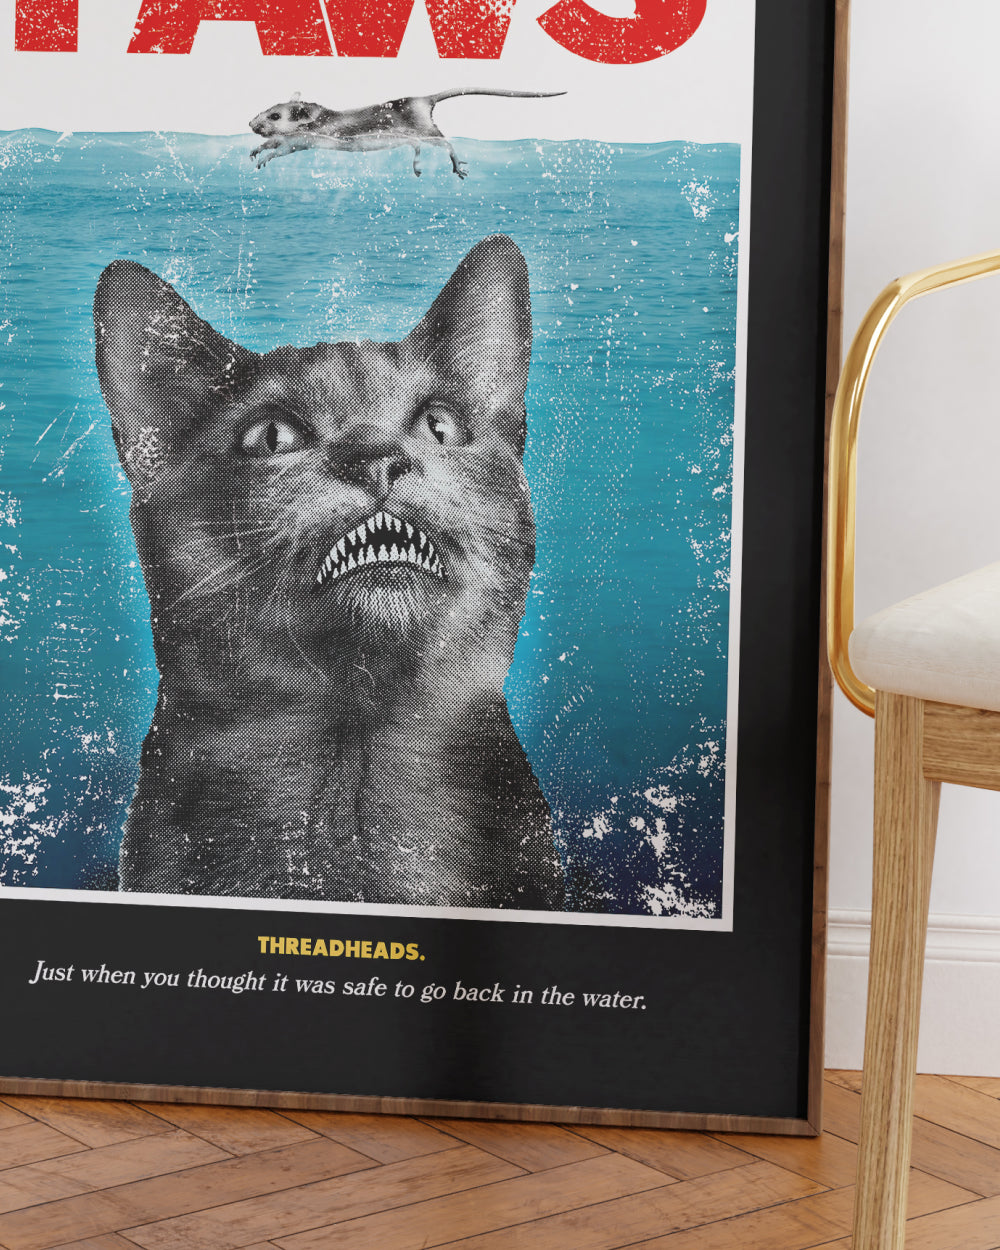 Paws Cat Art Print